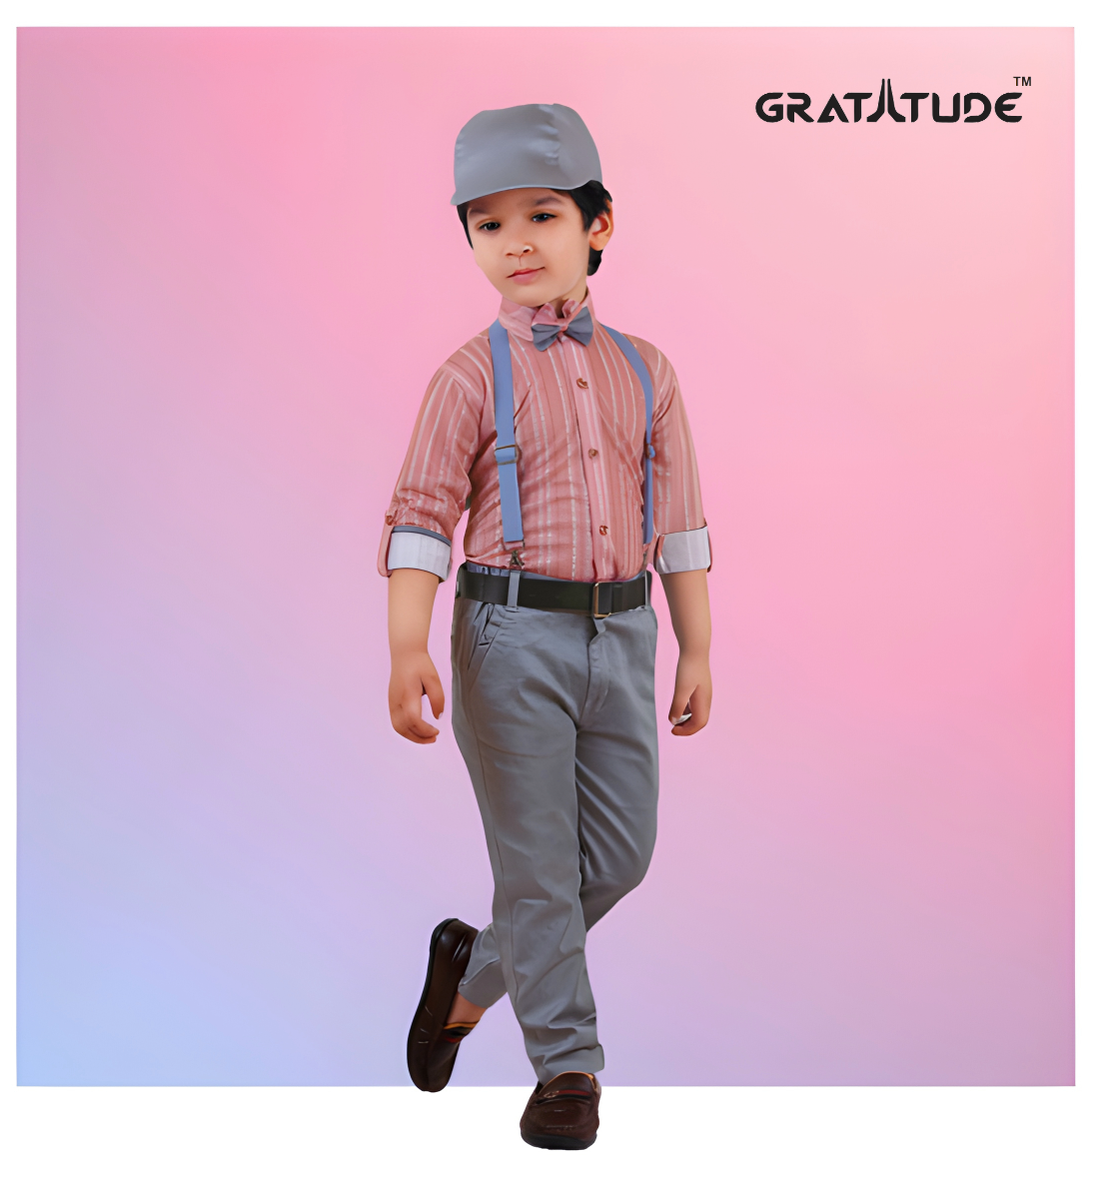 Gratitude 🙏: A Top Boys Wear Brand in India 👕👖